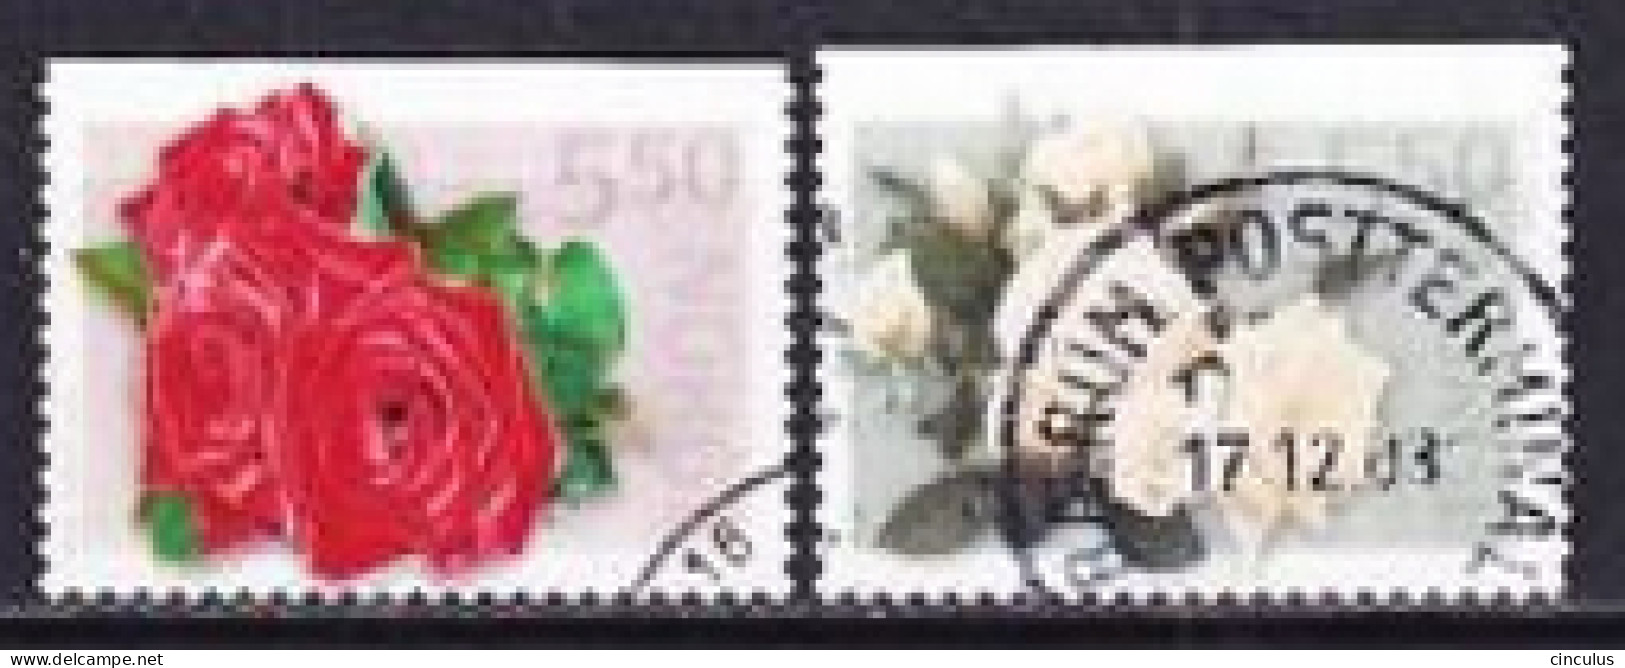 2003. Norway. Roses. Used. Mi. Nr. 1455-56 - Oblitérés